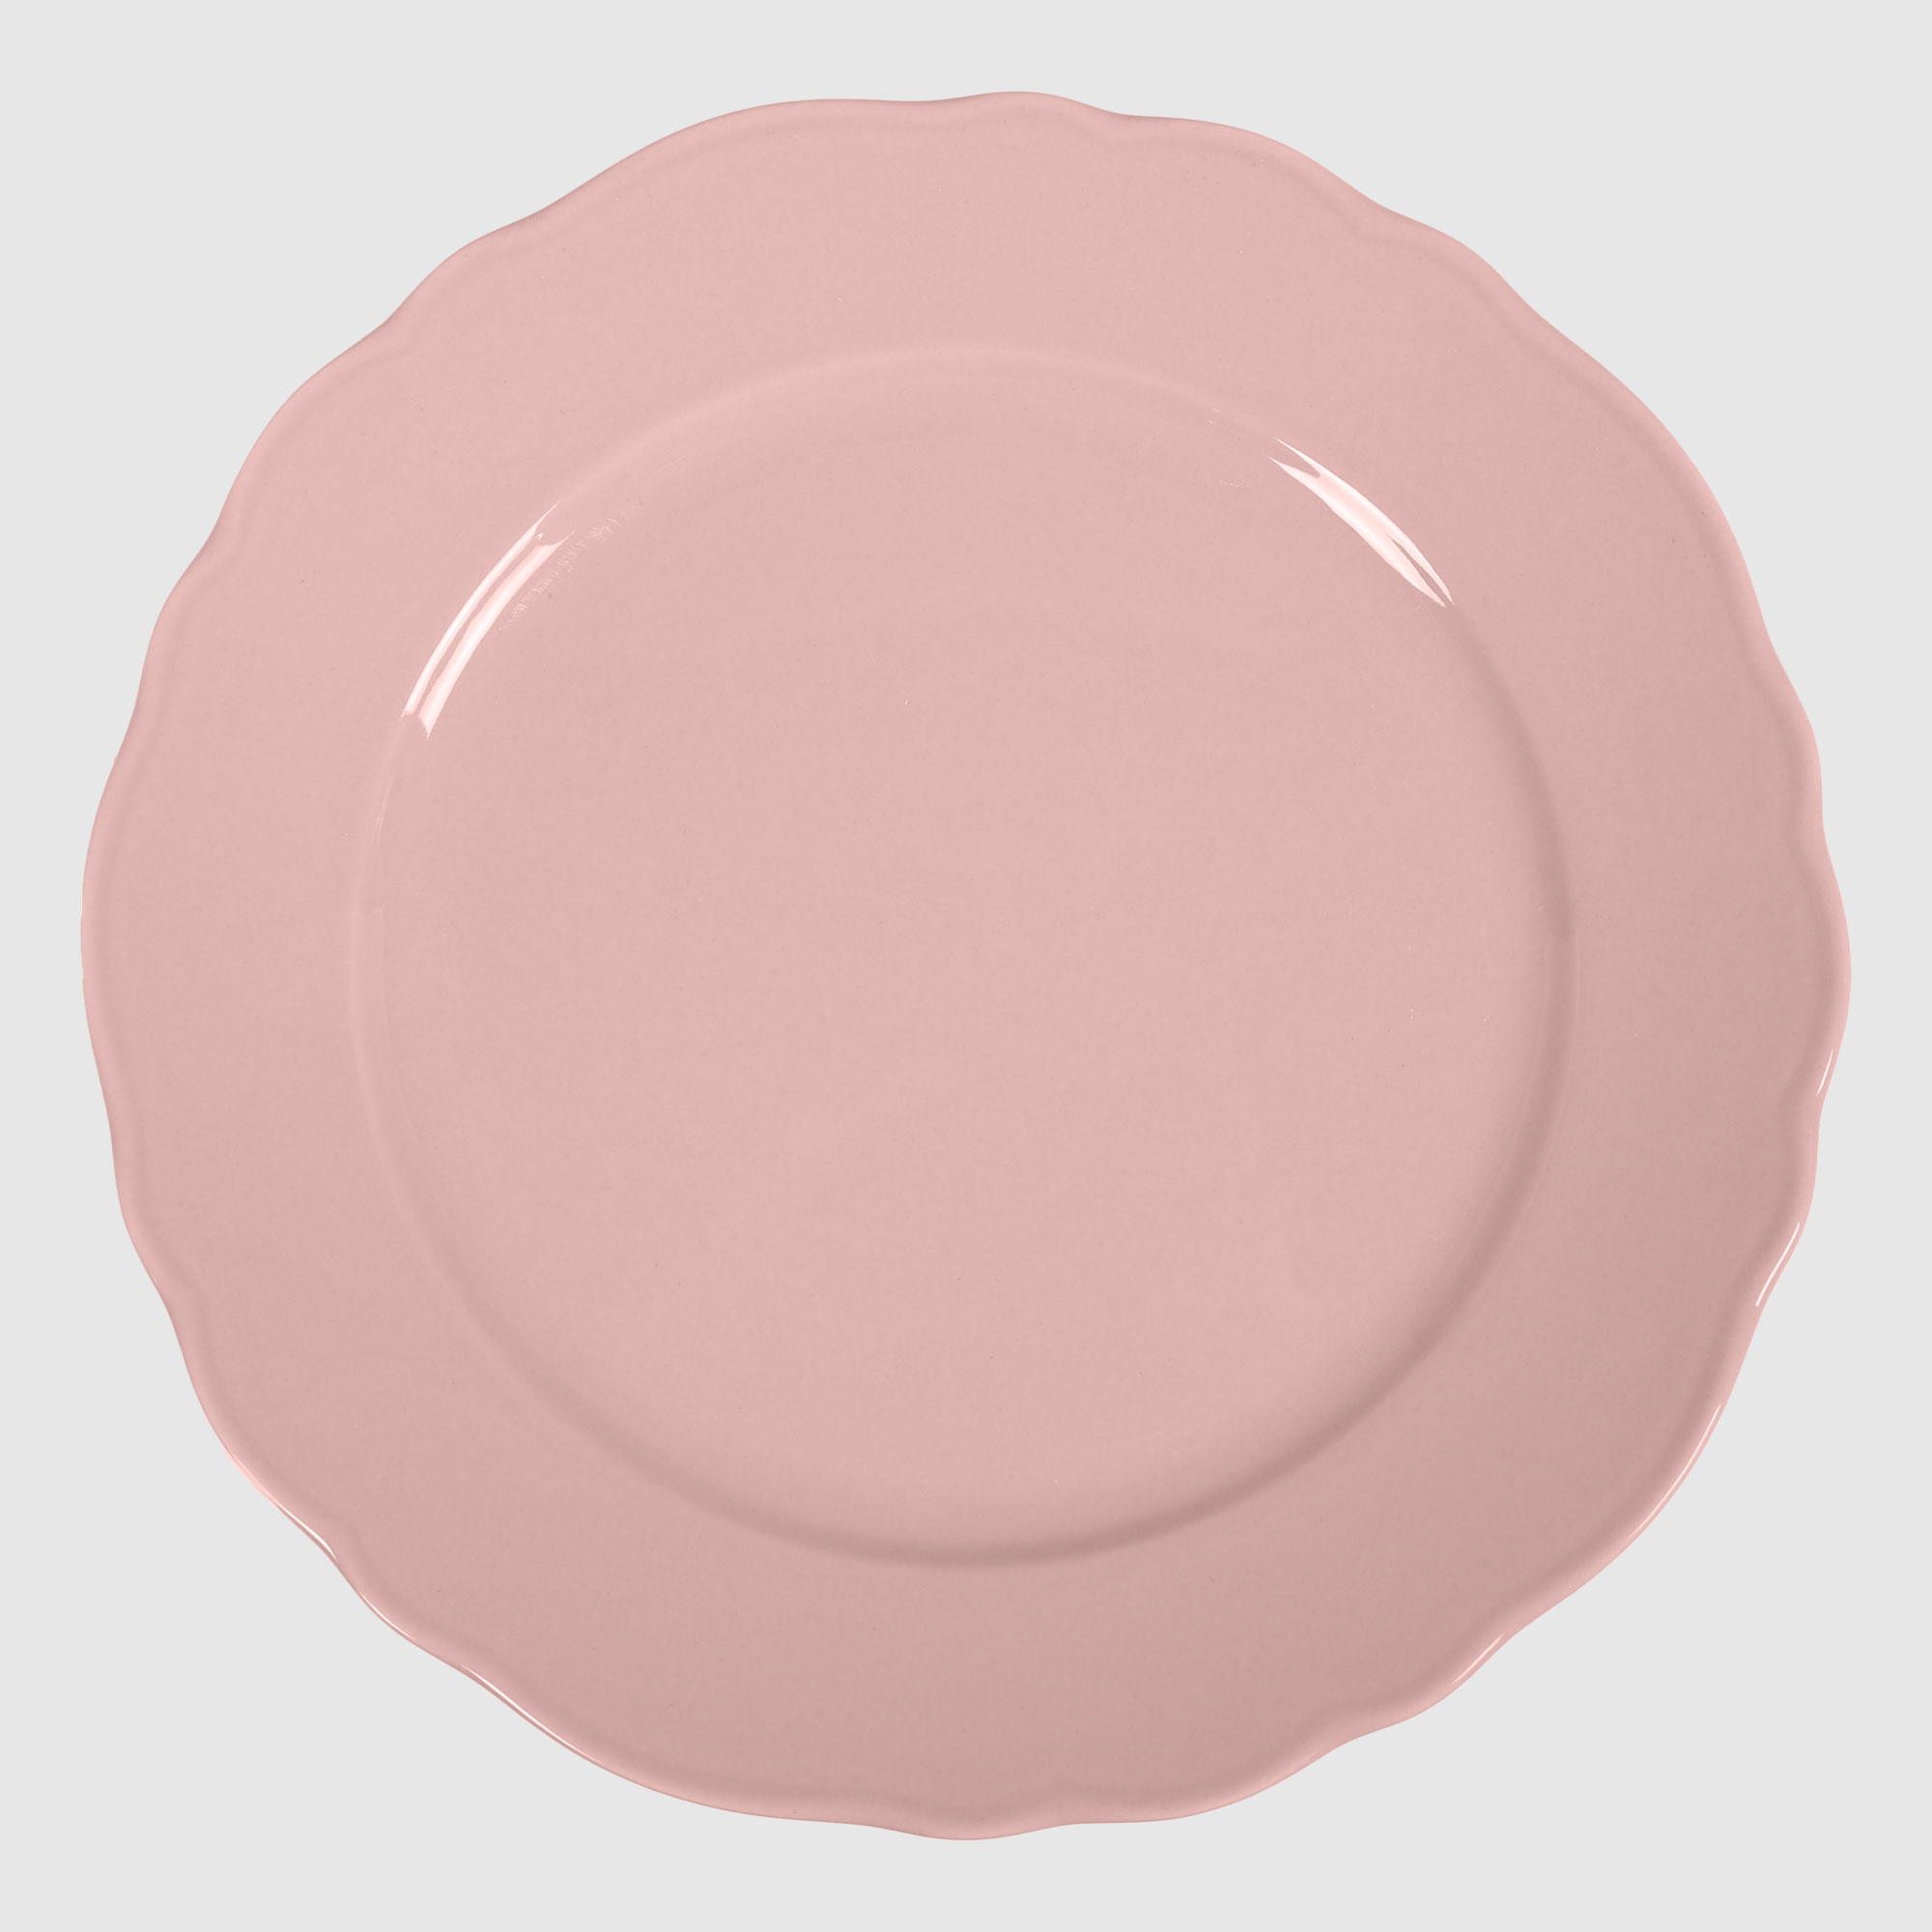 Тарелка Kutahya porselen Lar розовая 26 см тарелка kutahya porselen iron 21 см